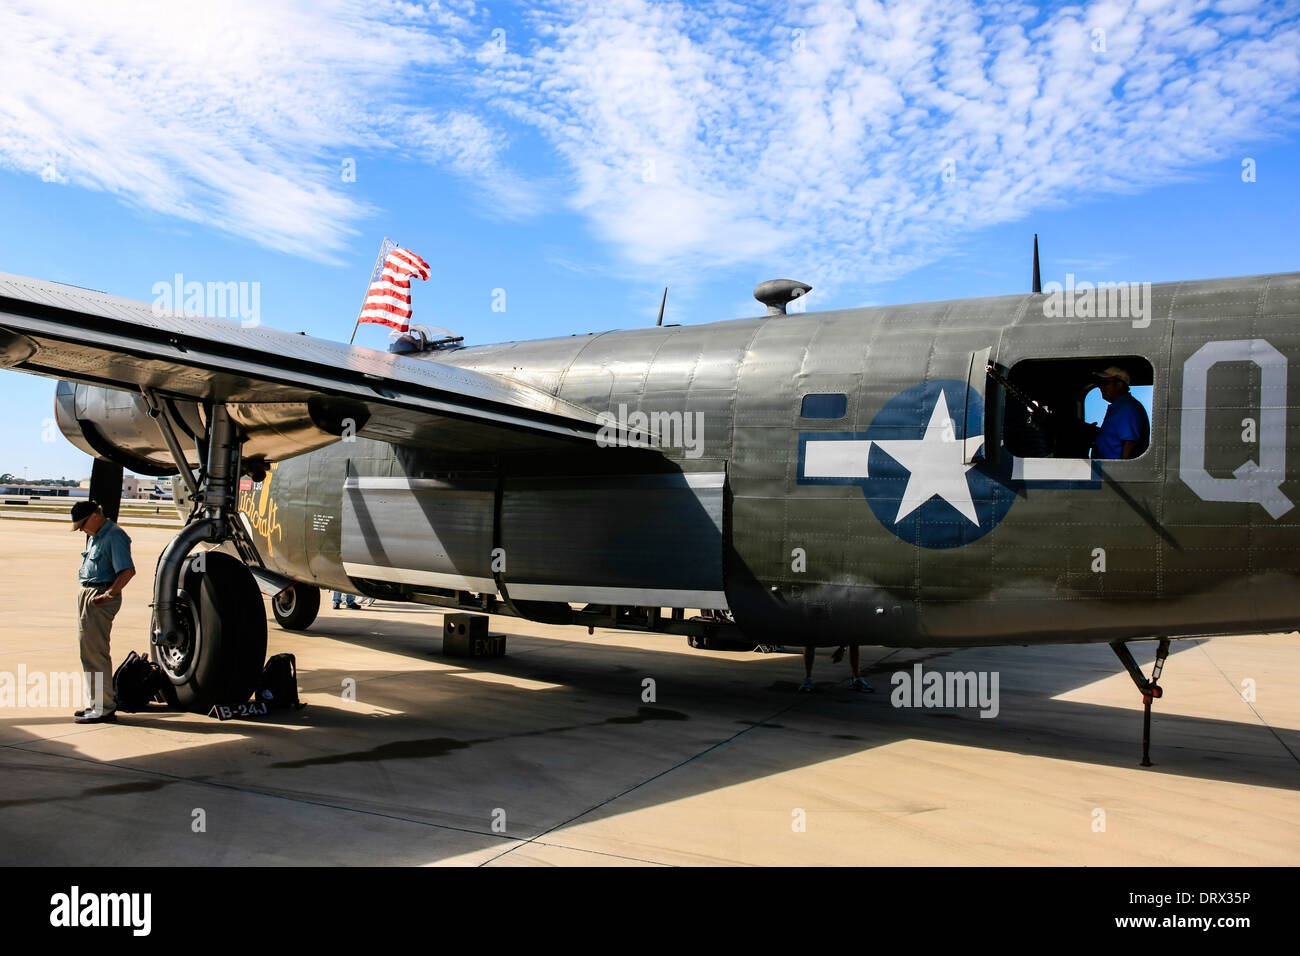 A WW2 B24 Liberator bomber plane on display at Sarasota airport in Florida Stock Photo